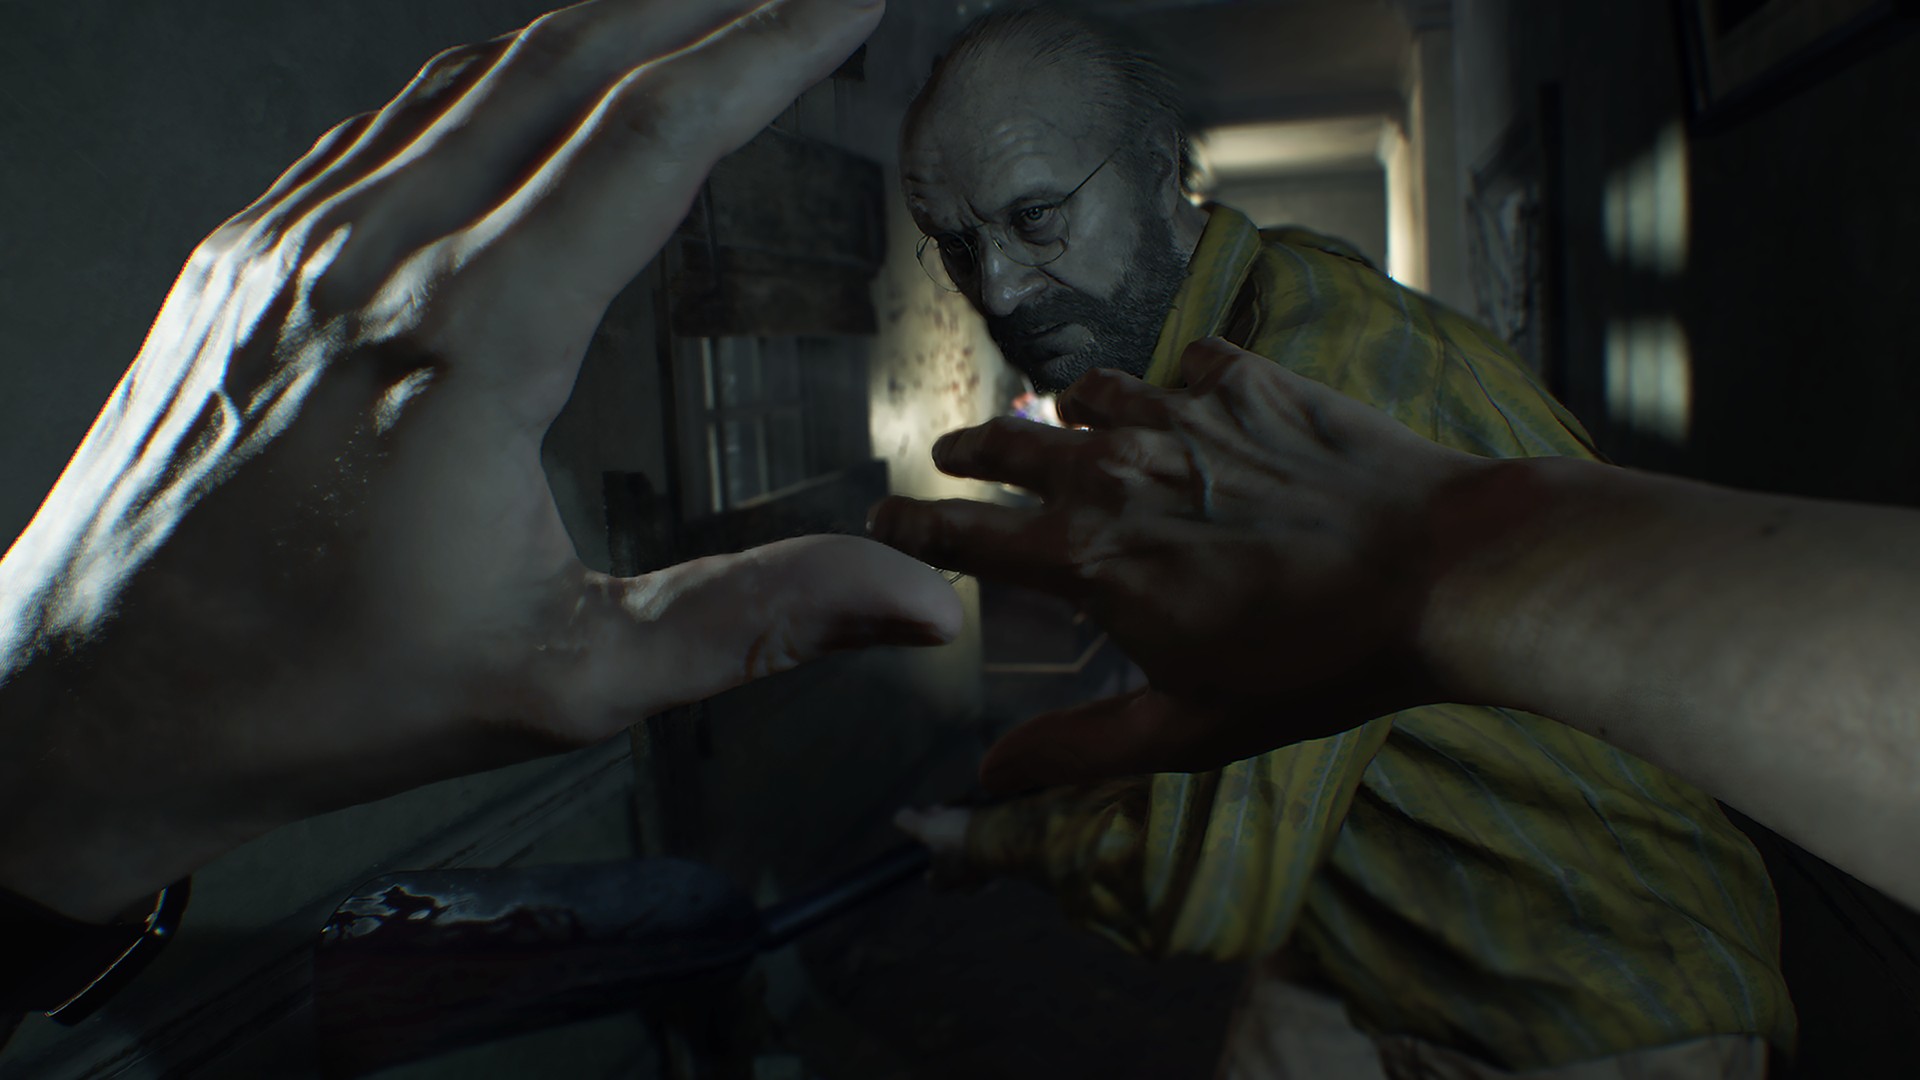 Save 60% on Resident Evil Village on Steam